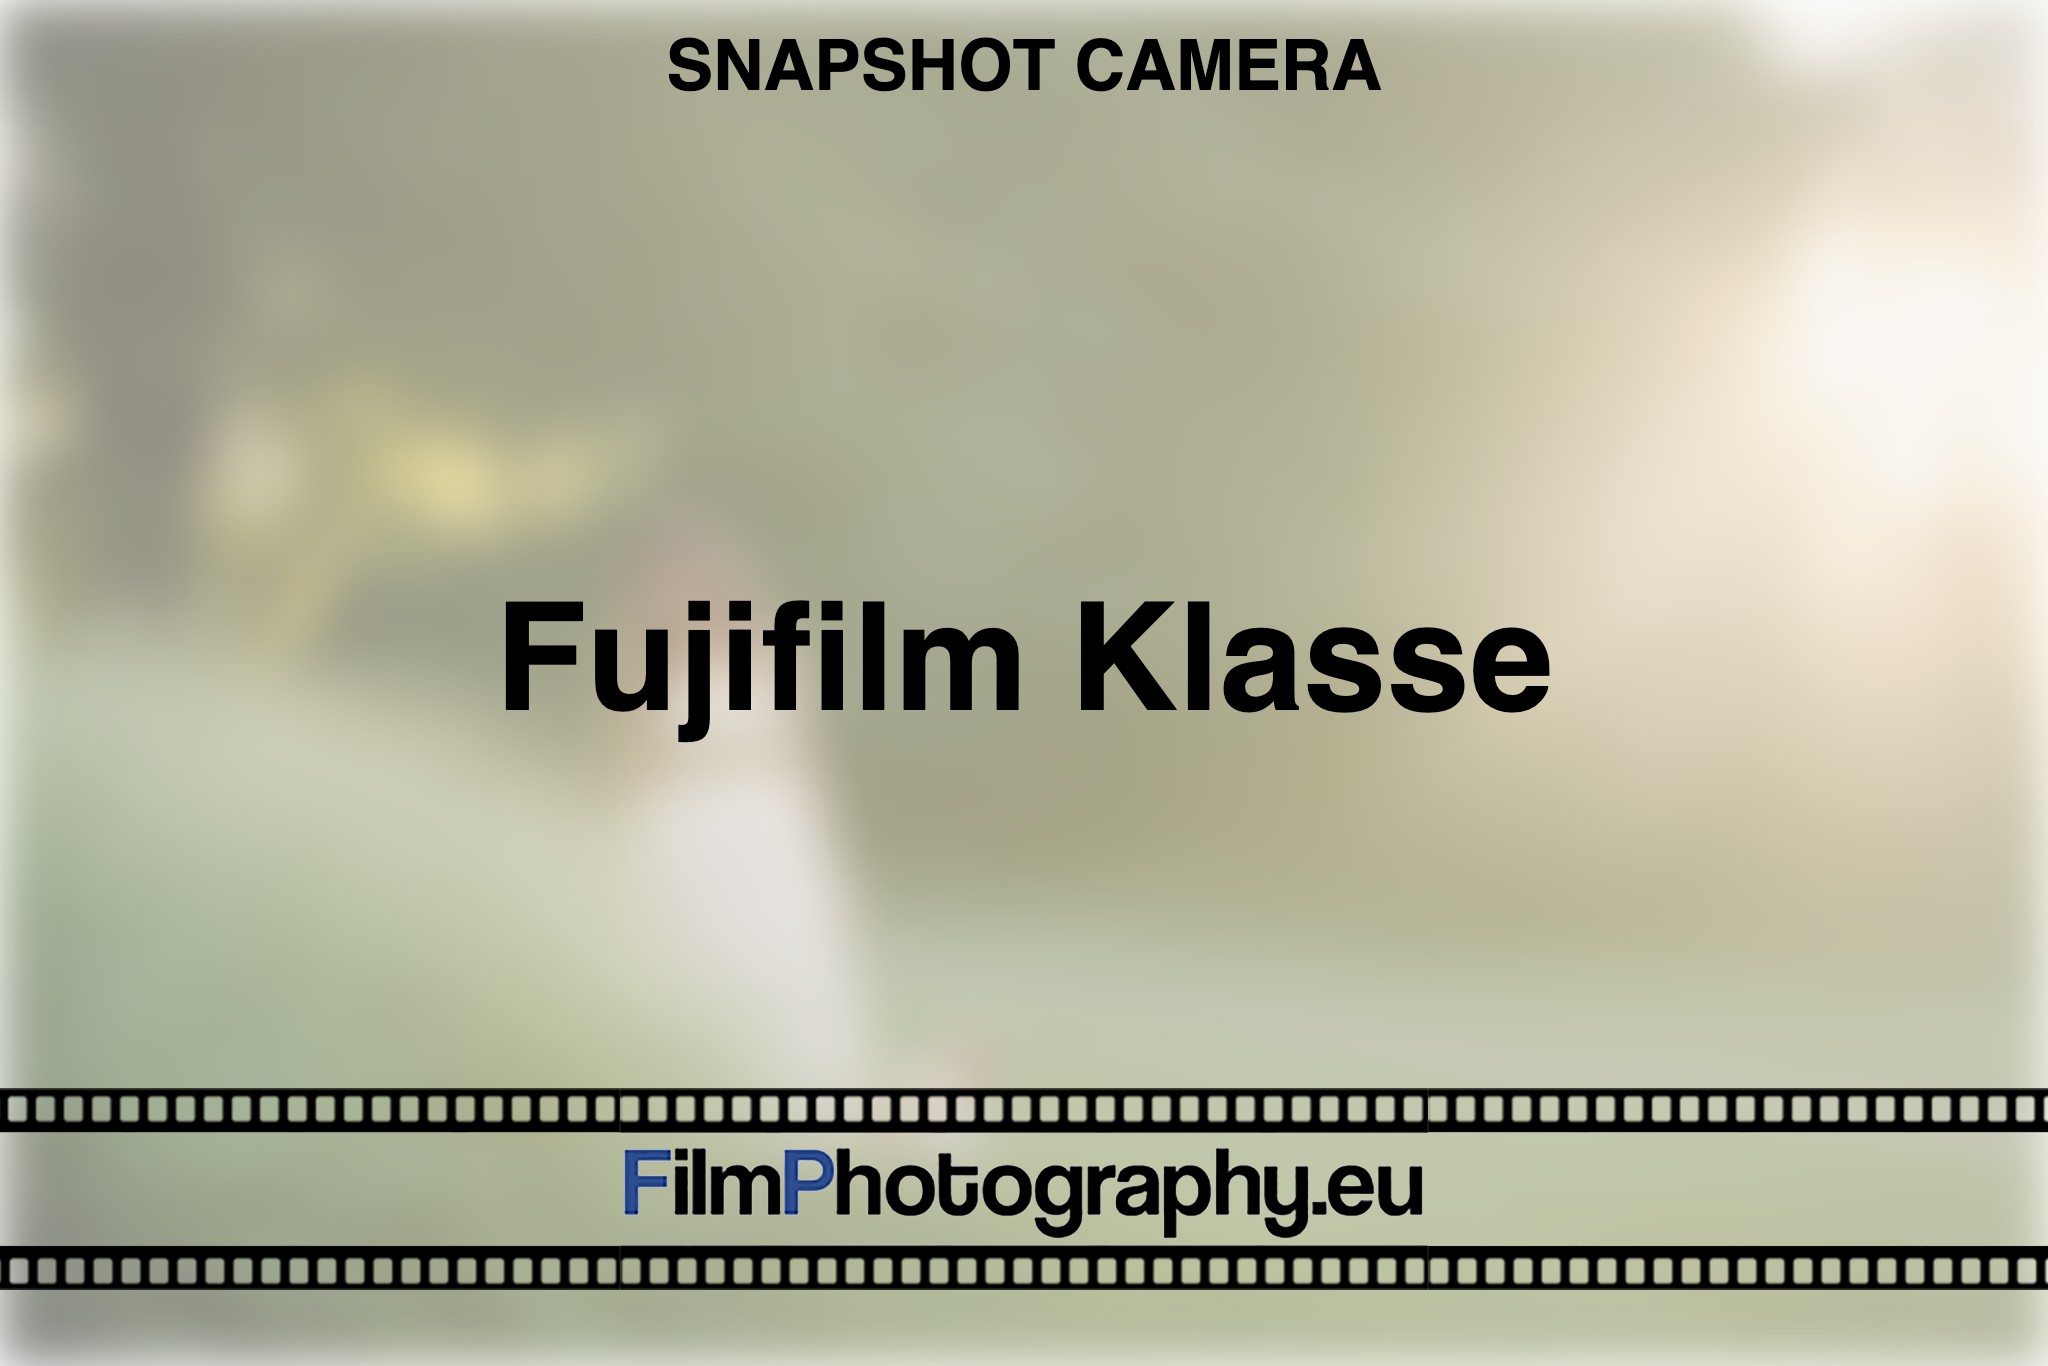 fujifilm-klasse-snapshot-camera-bnv